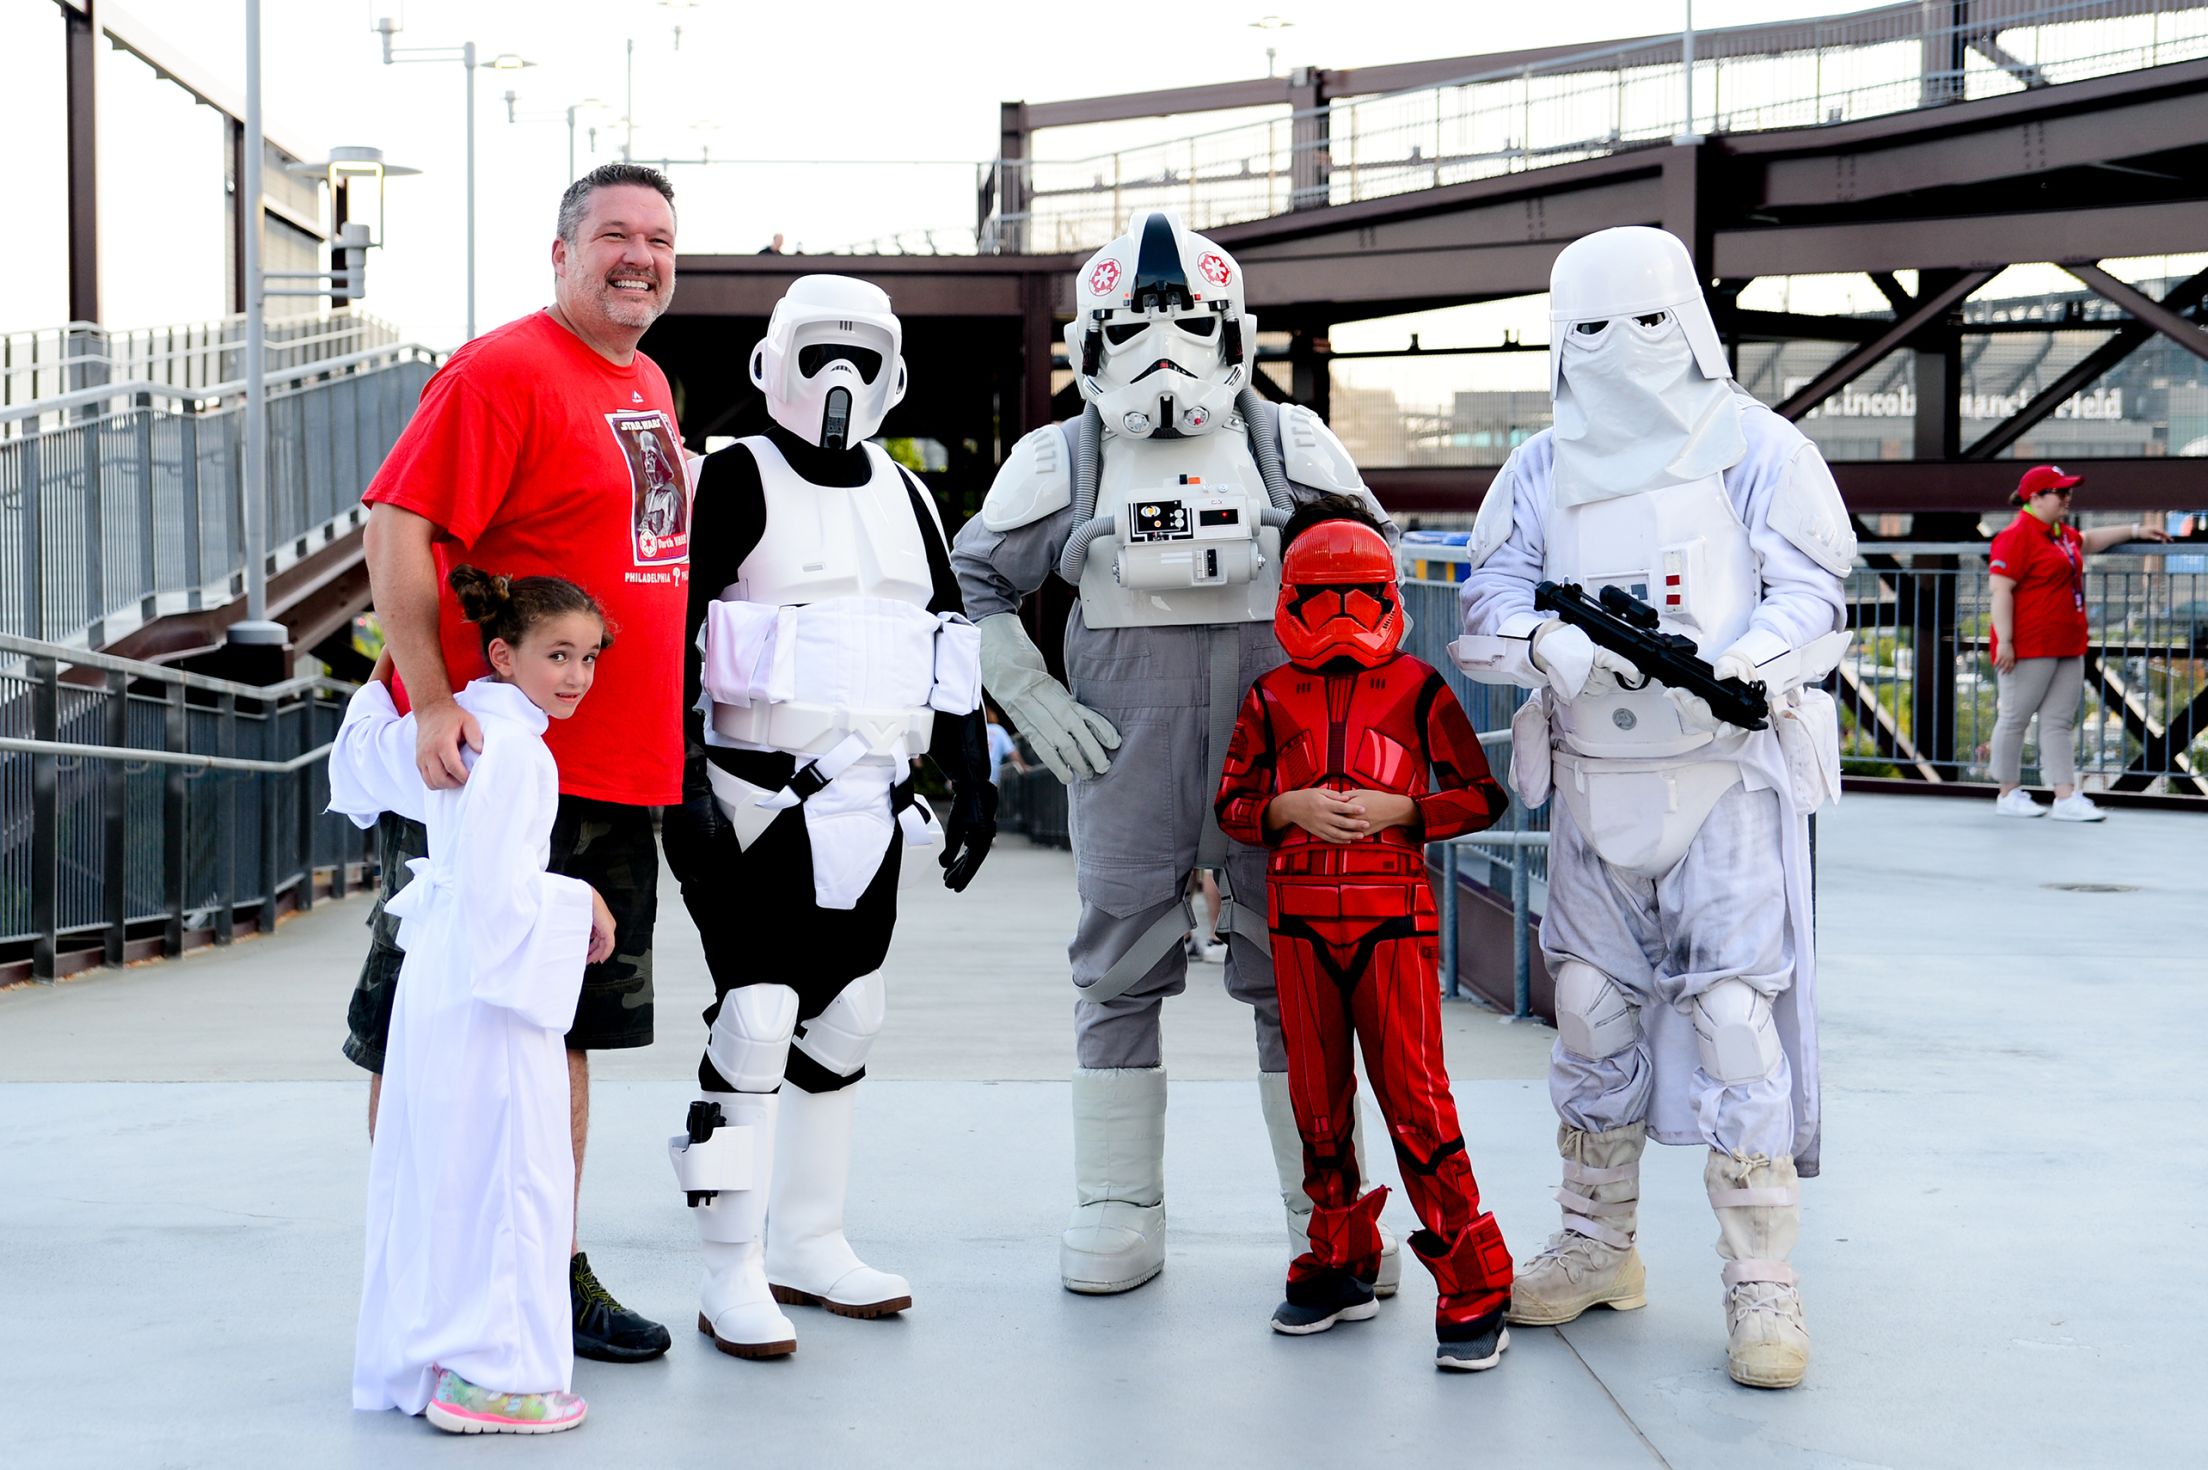 Arizona Diamondbacks fans attend Star Wars night in full costume